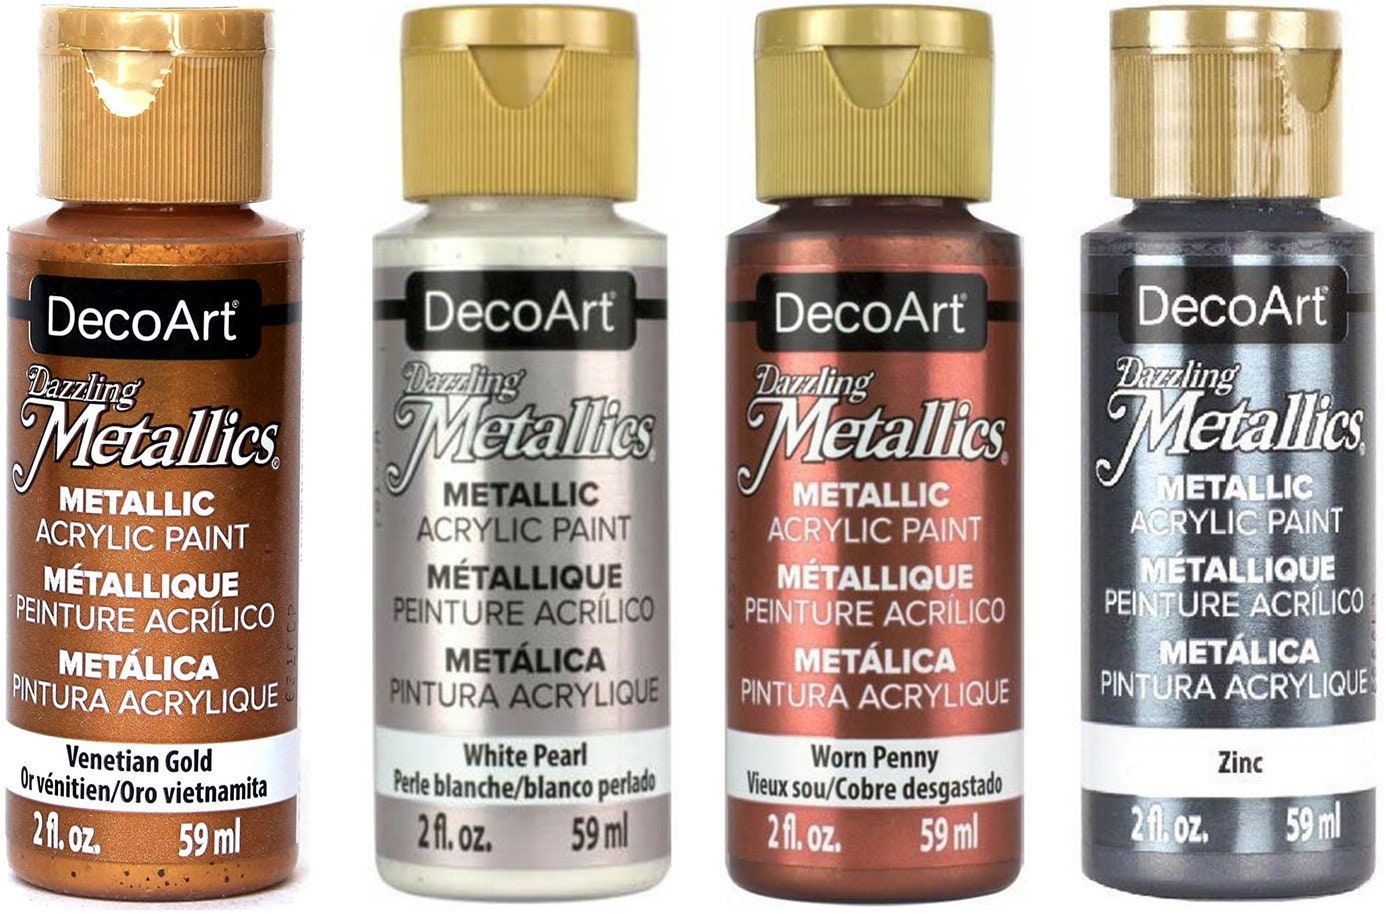 Decoart Dazzling Metallics 2 oz. Shimmering Silver Acrylic Paint